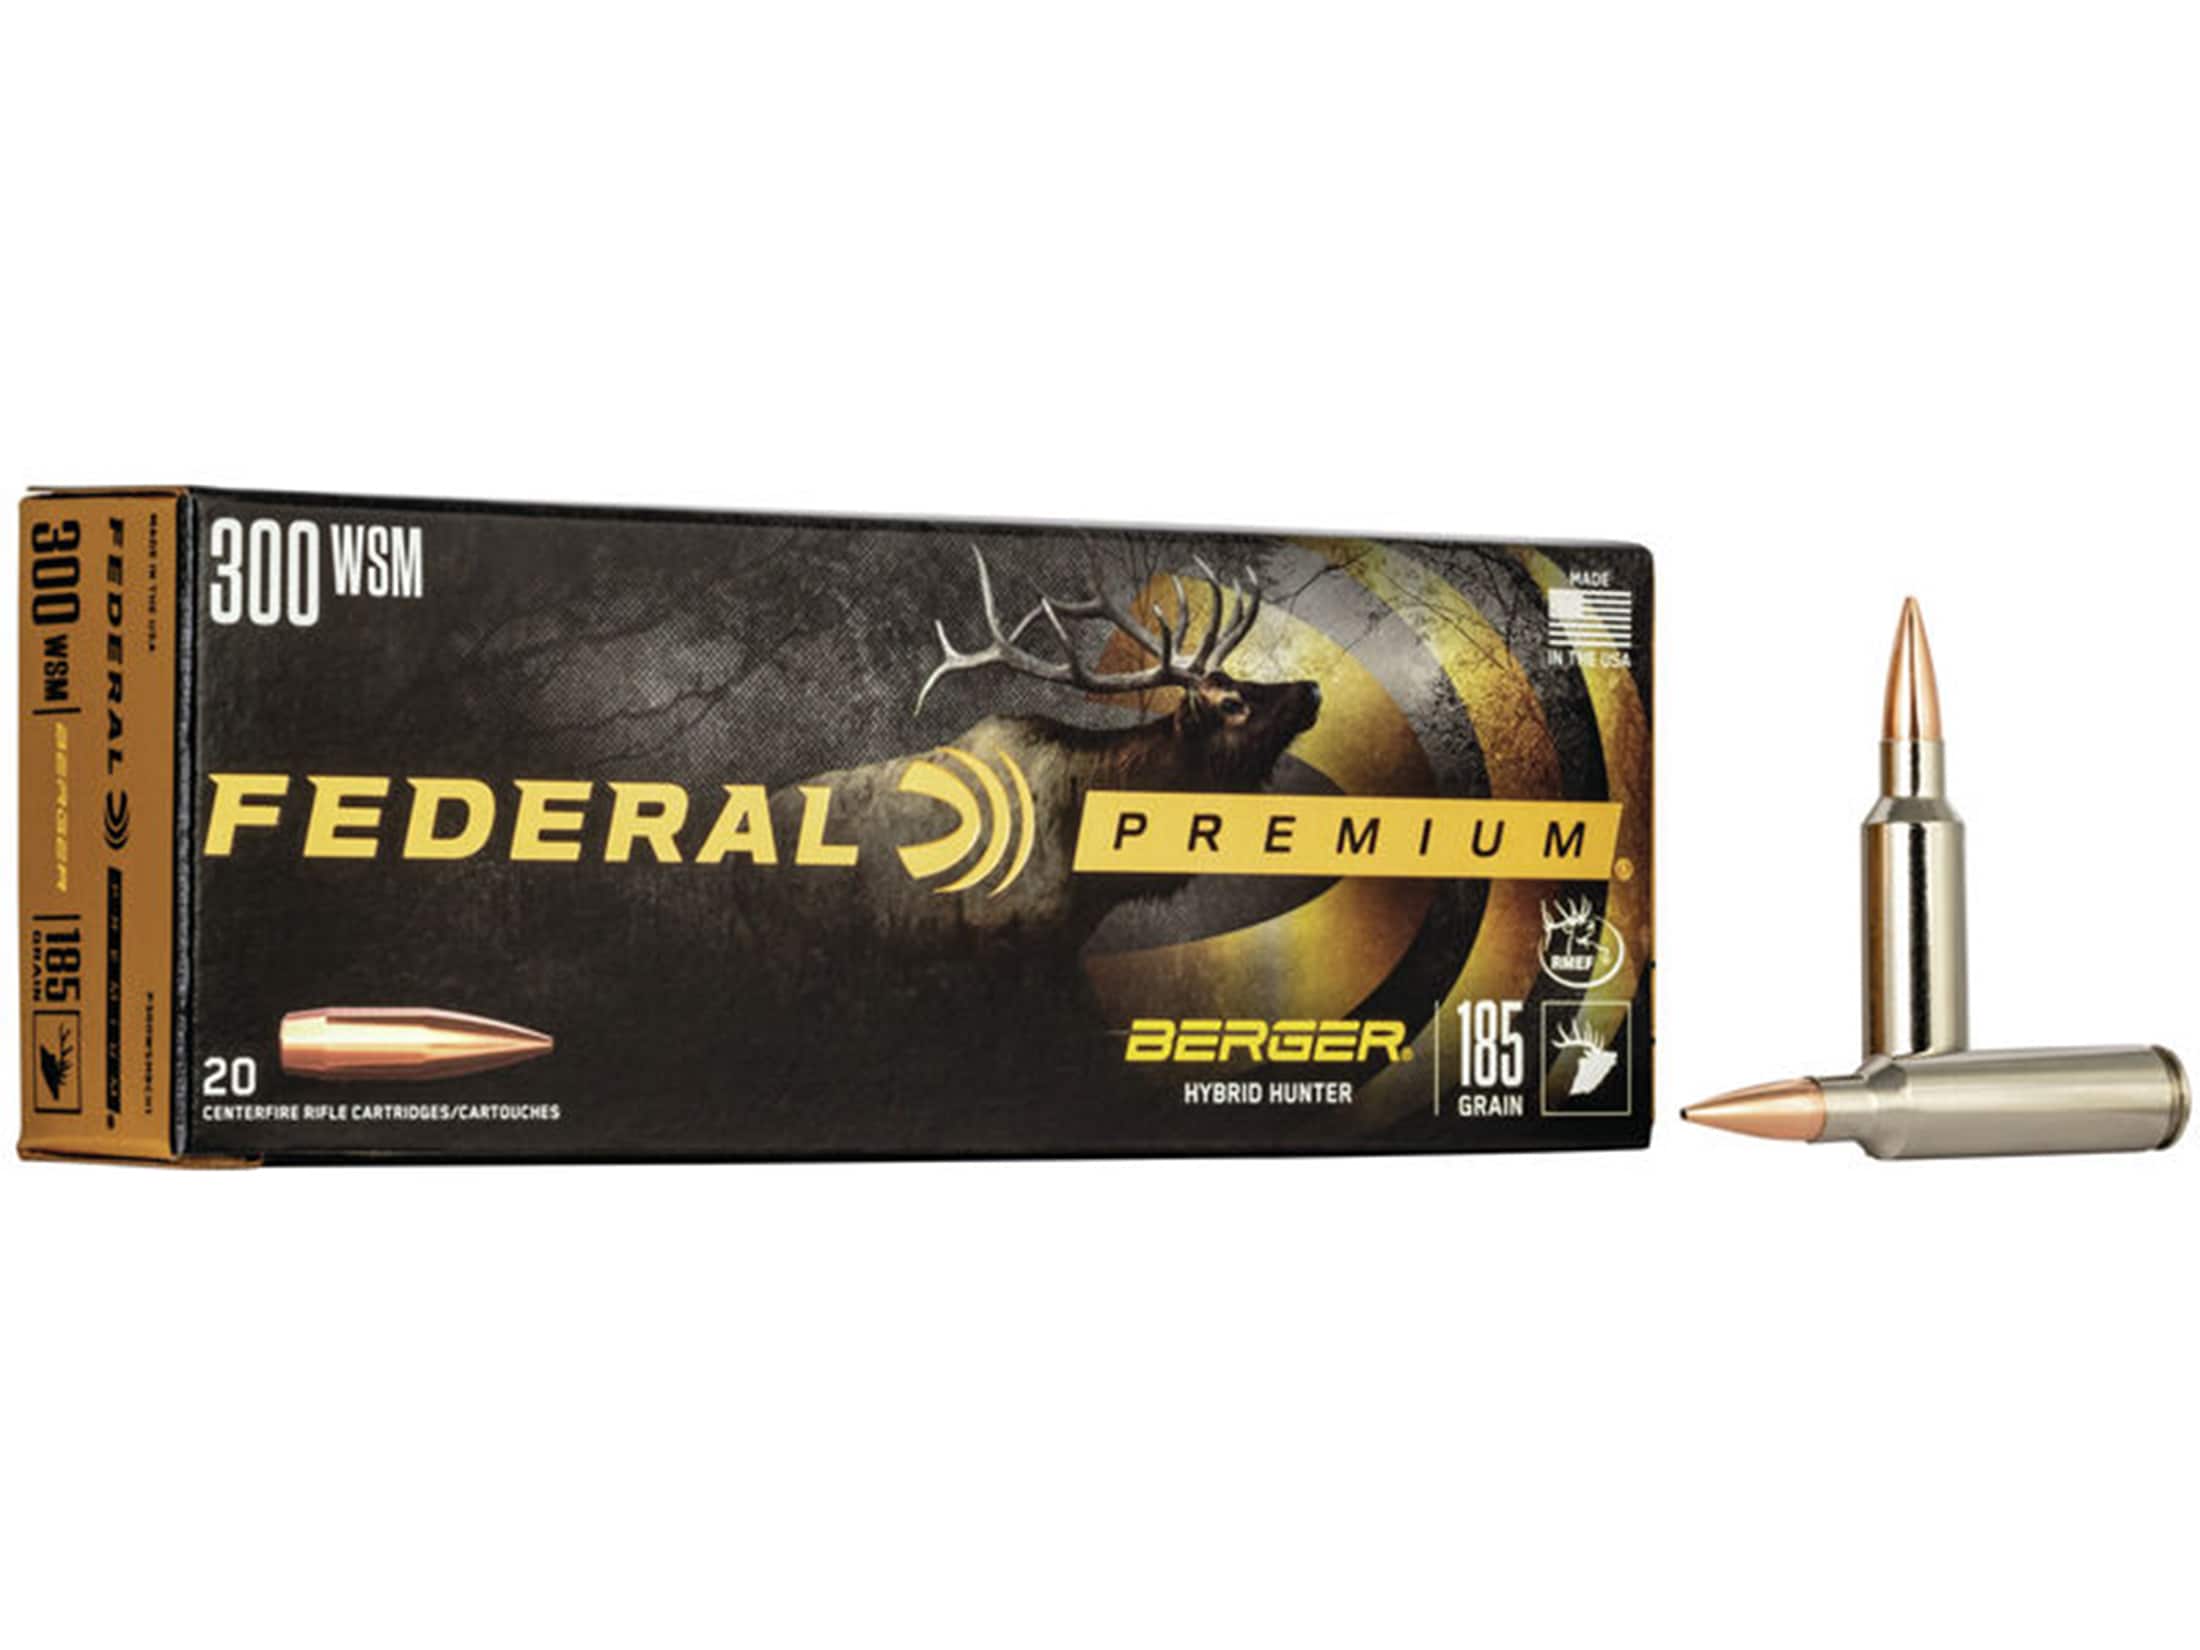 Federal Premium Ammunition 300 Winchester Short Magnum (WSM) 185 Grain Berger Hybrid Hunter